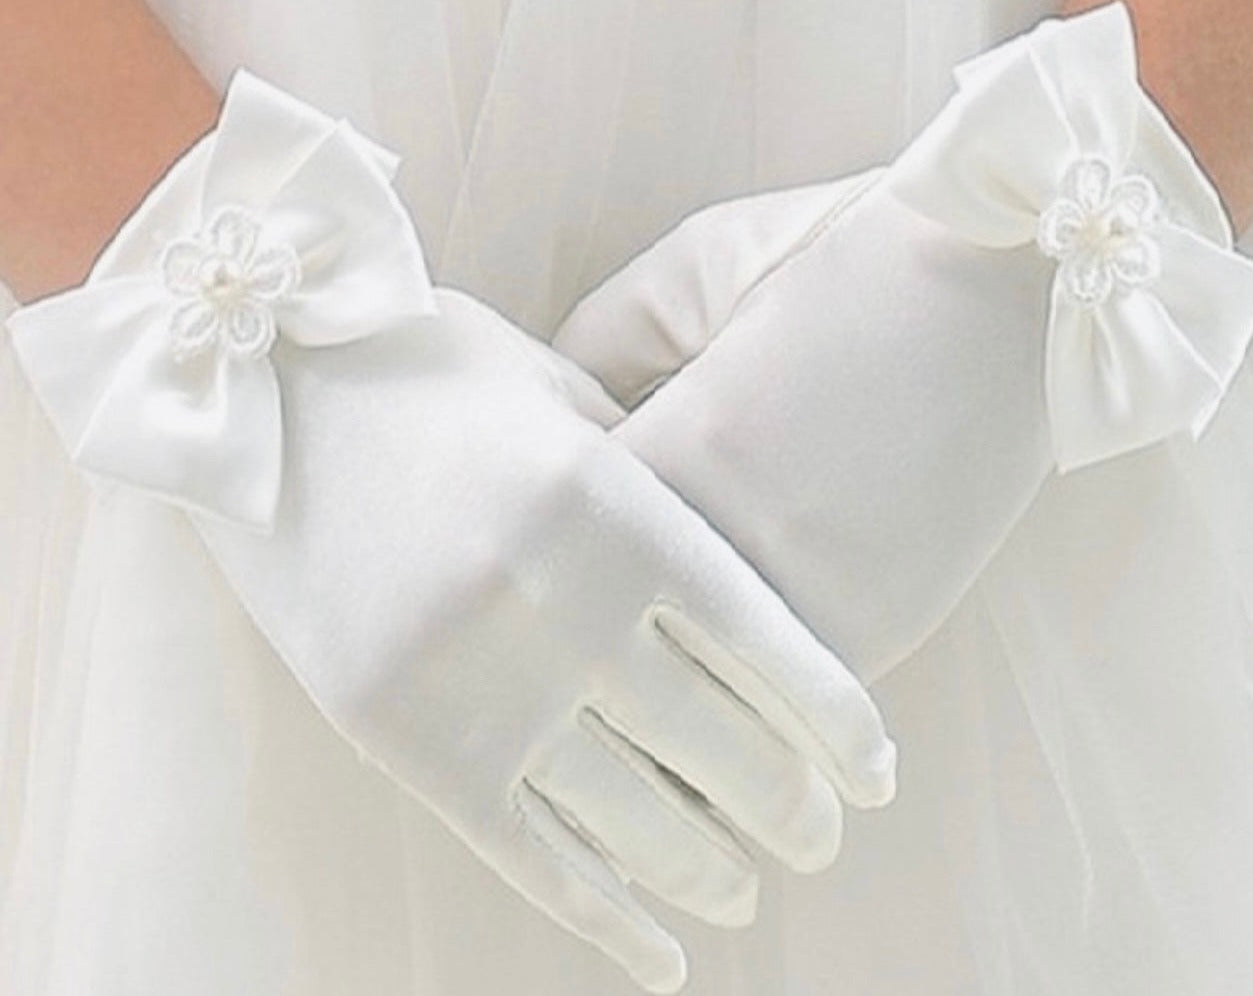 Wedding Flower Girl Short Gloves with Bow